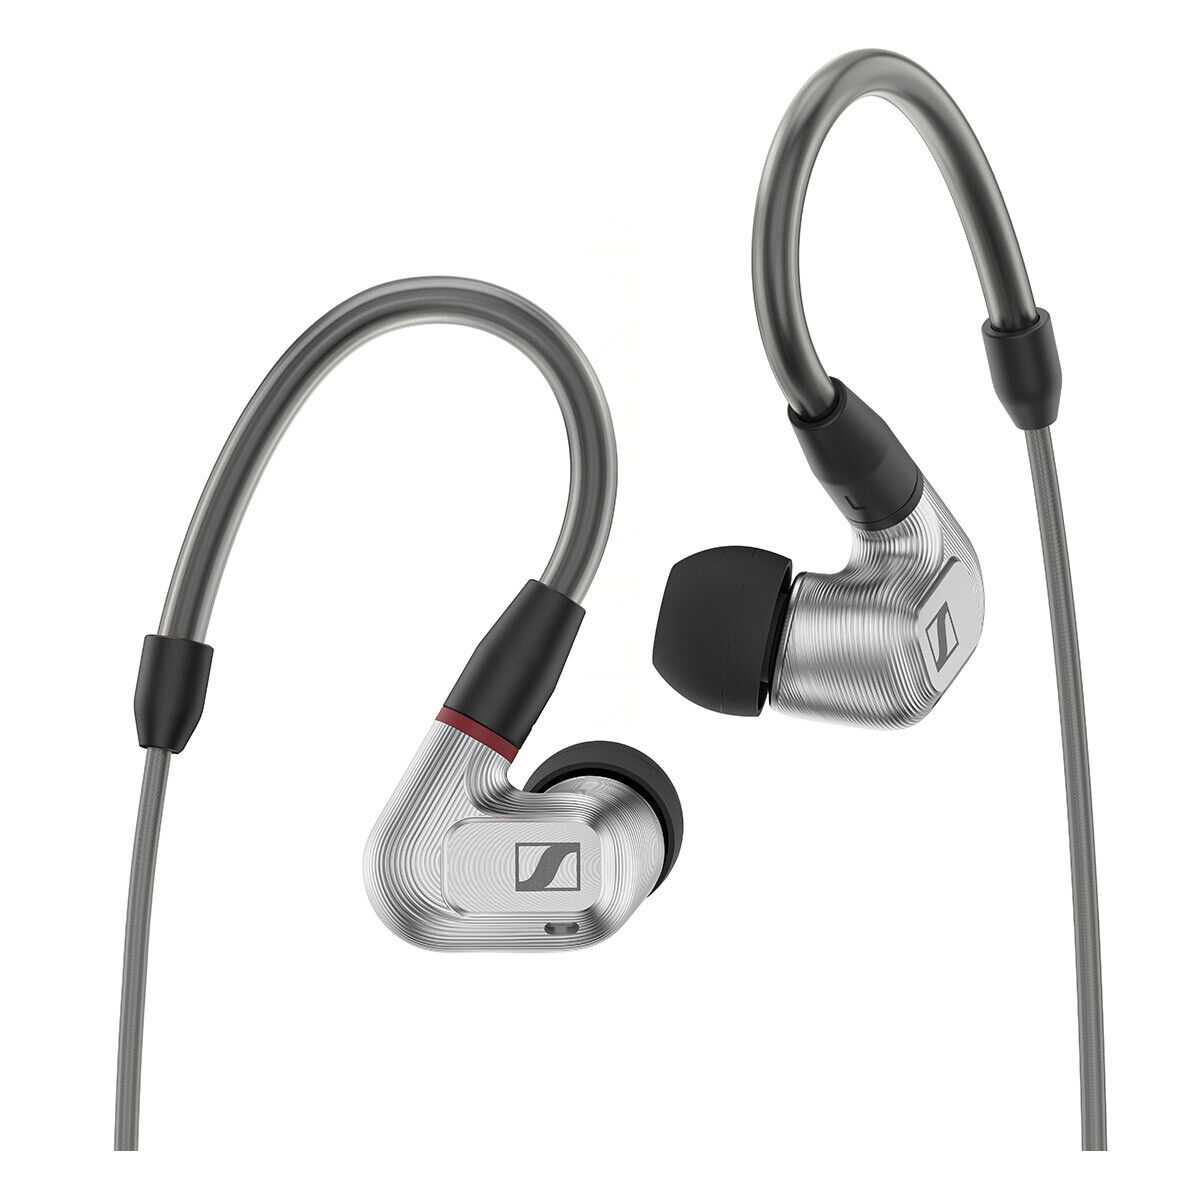 thinkstar Ie 900 Wired In-Ear Monitor Headphones